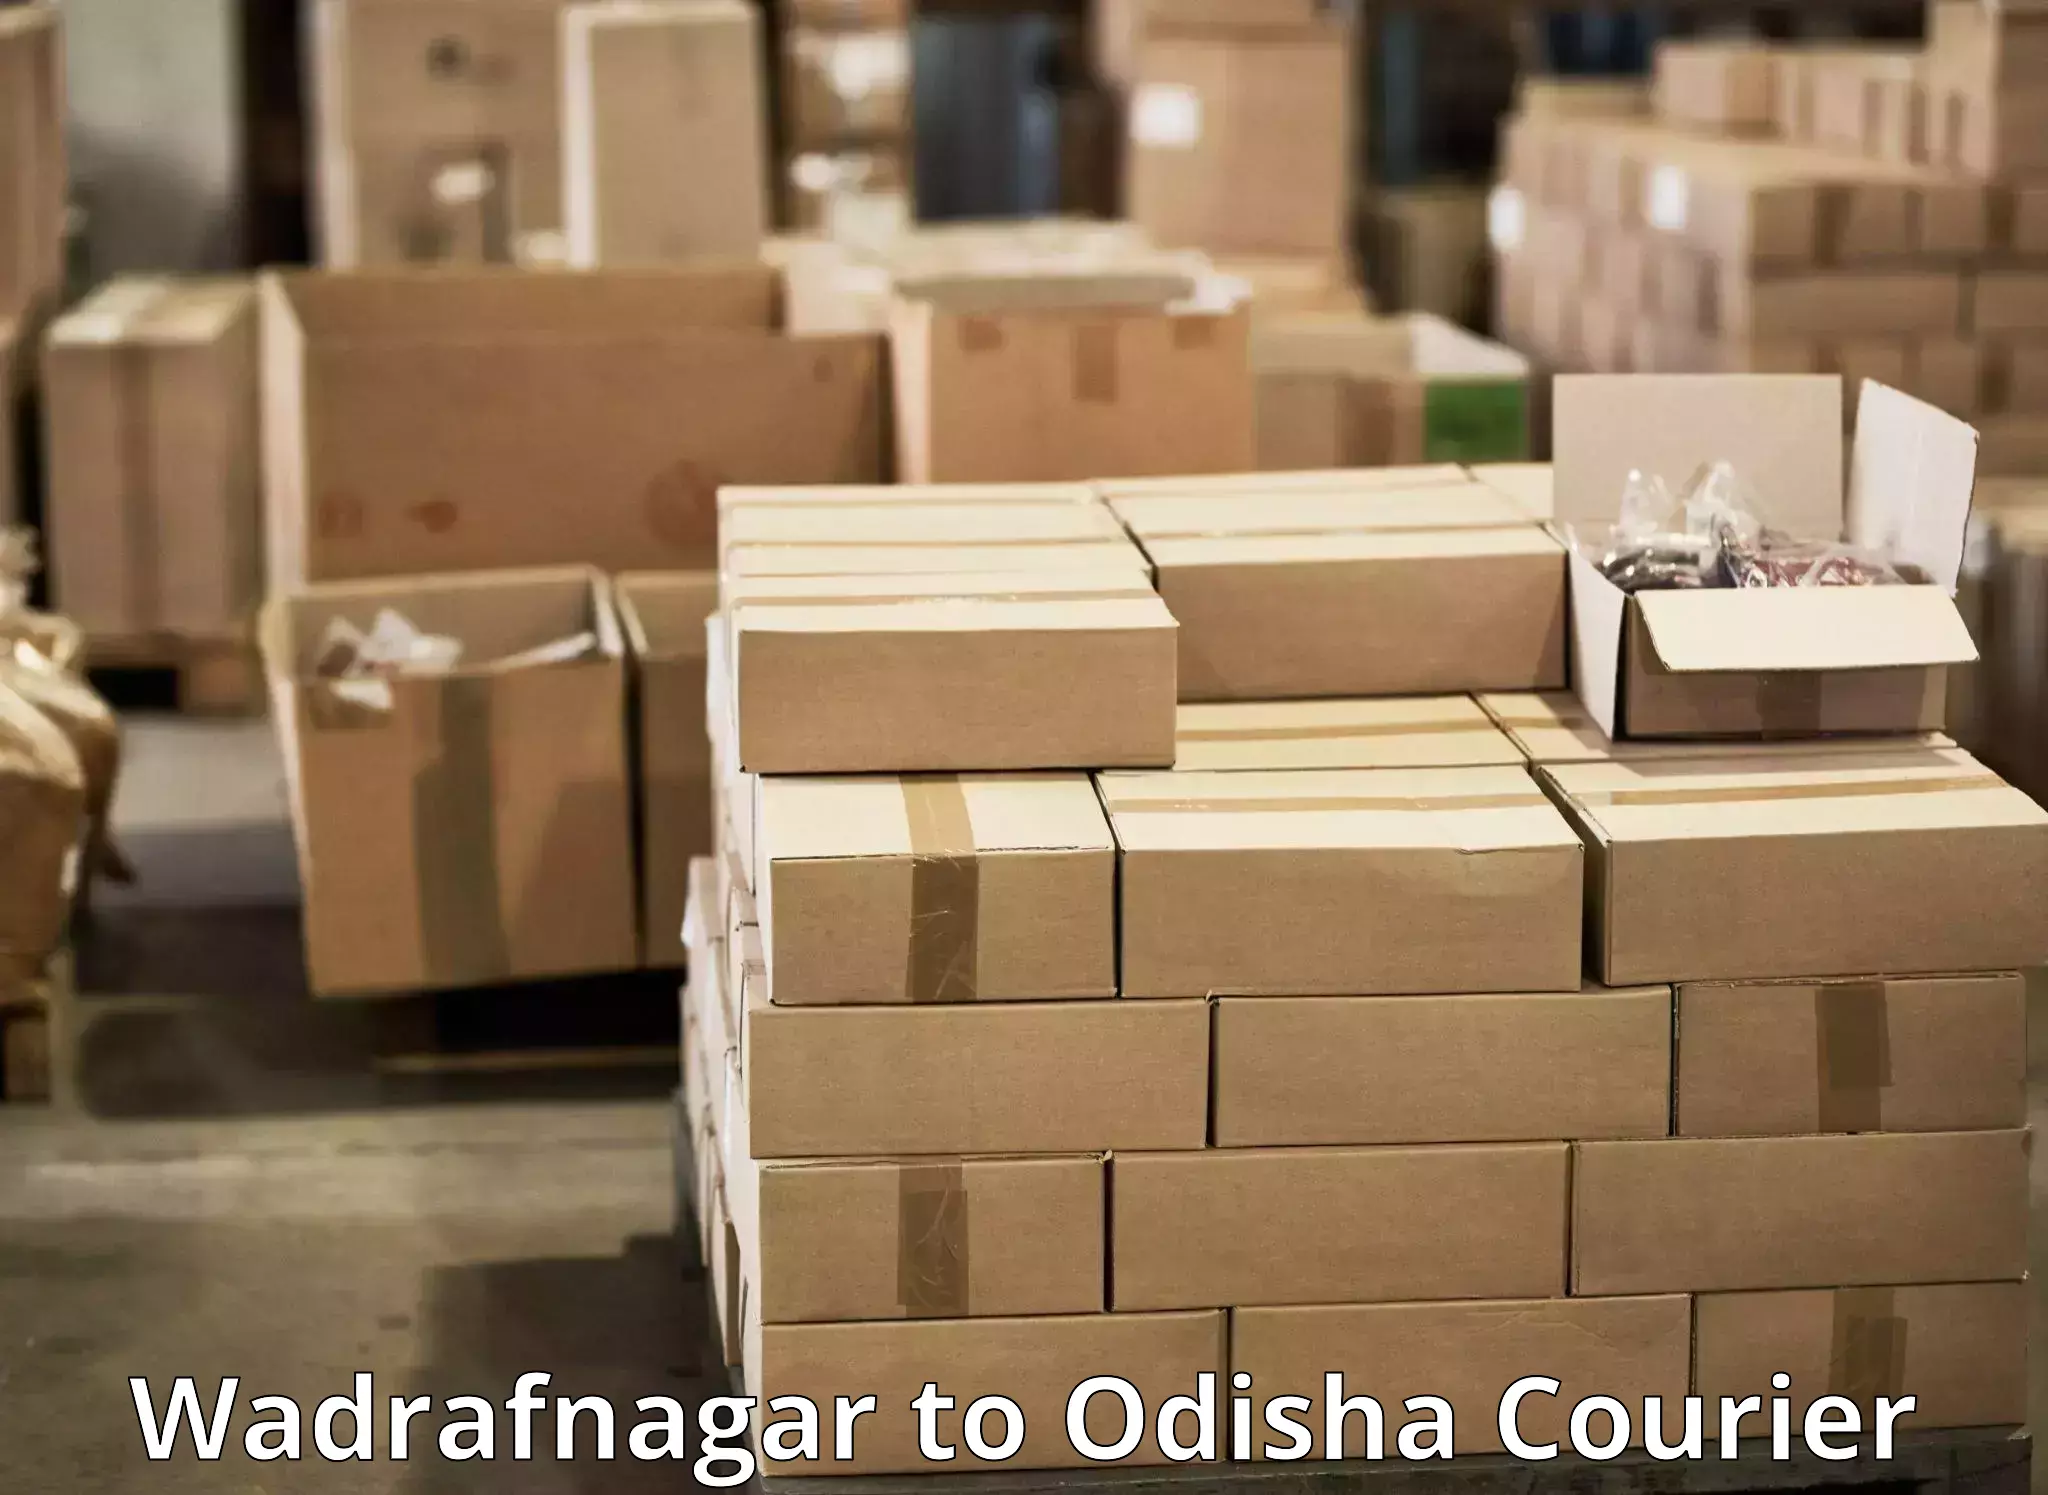 Expedited shipping methods Wadrafnagar to Jaraka